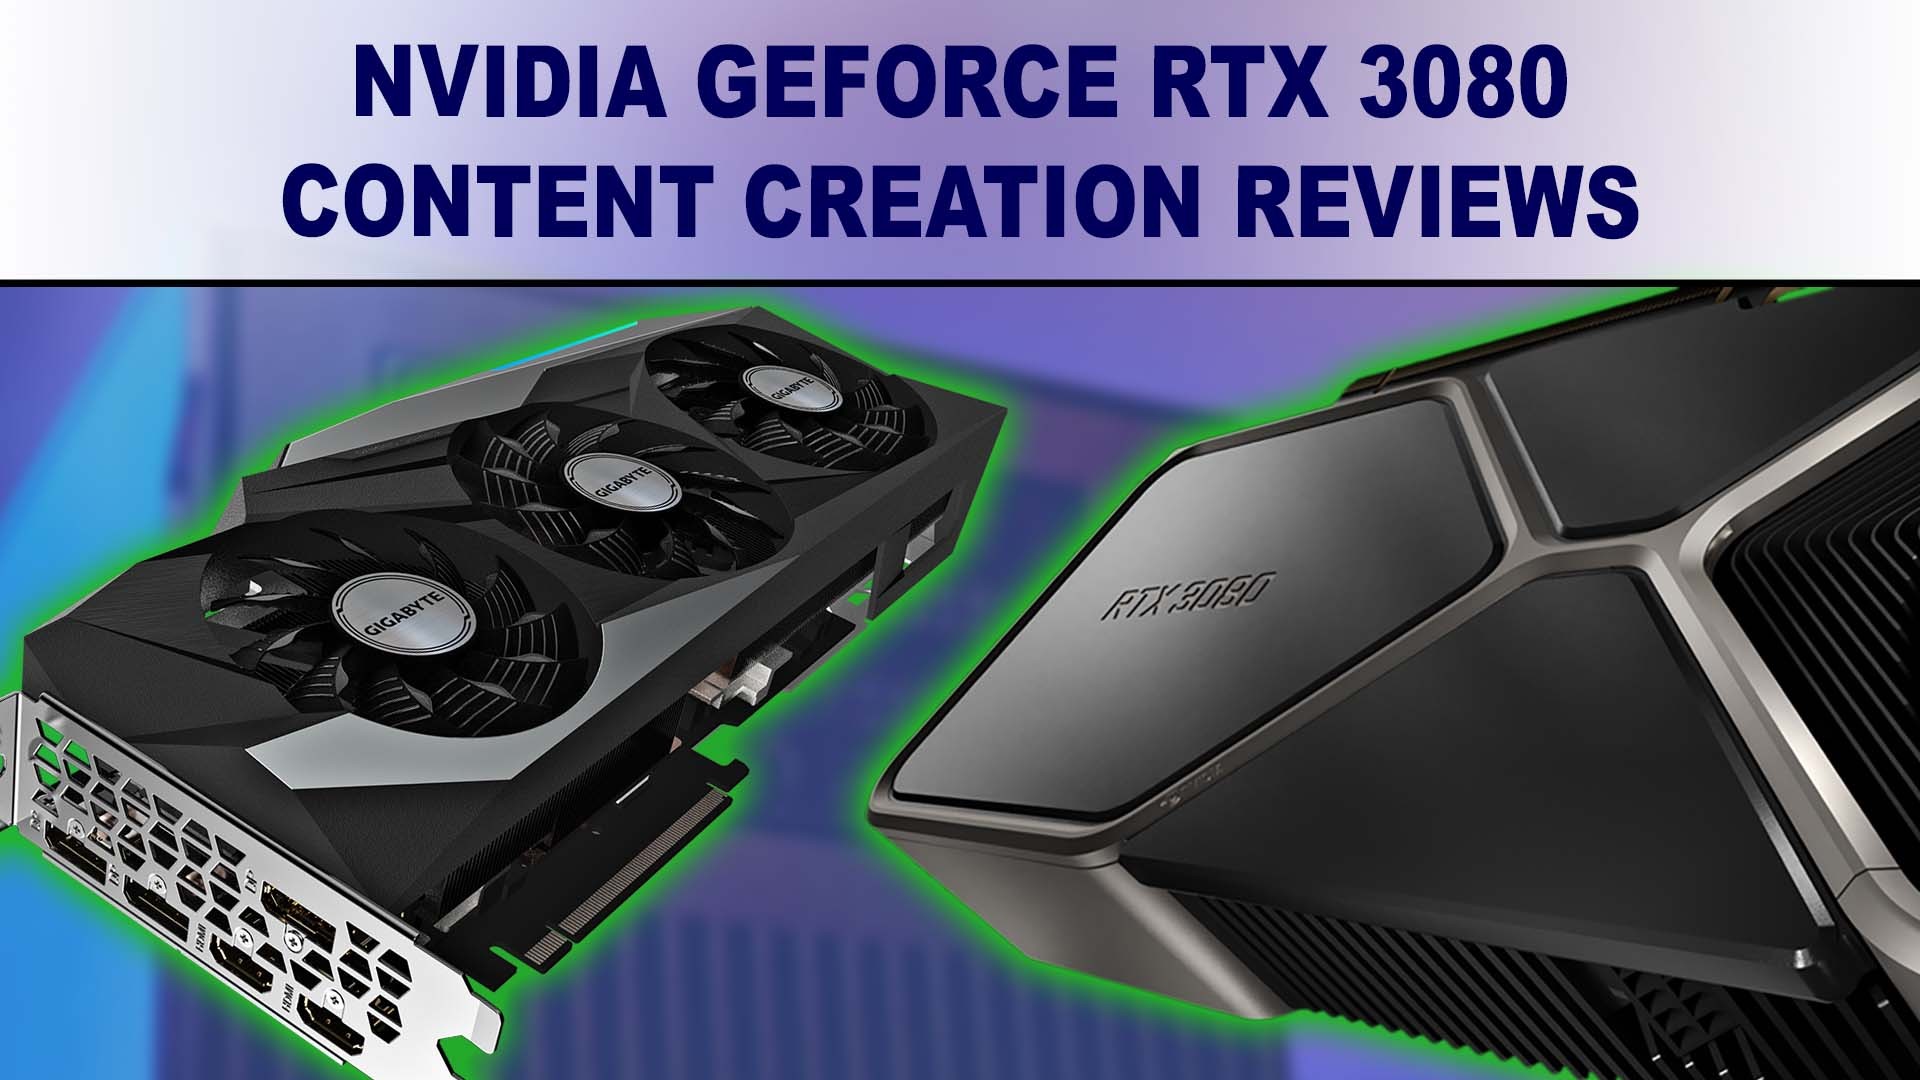 NVIDIA GeForce RTX 3080 10GB benchmark review summary